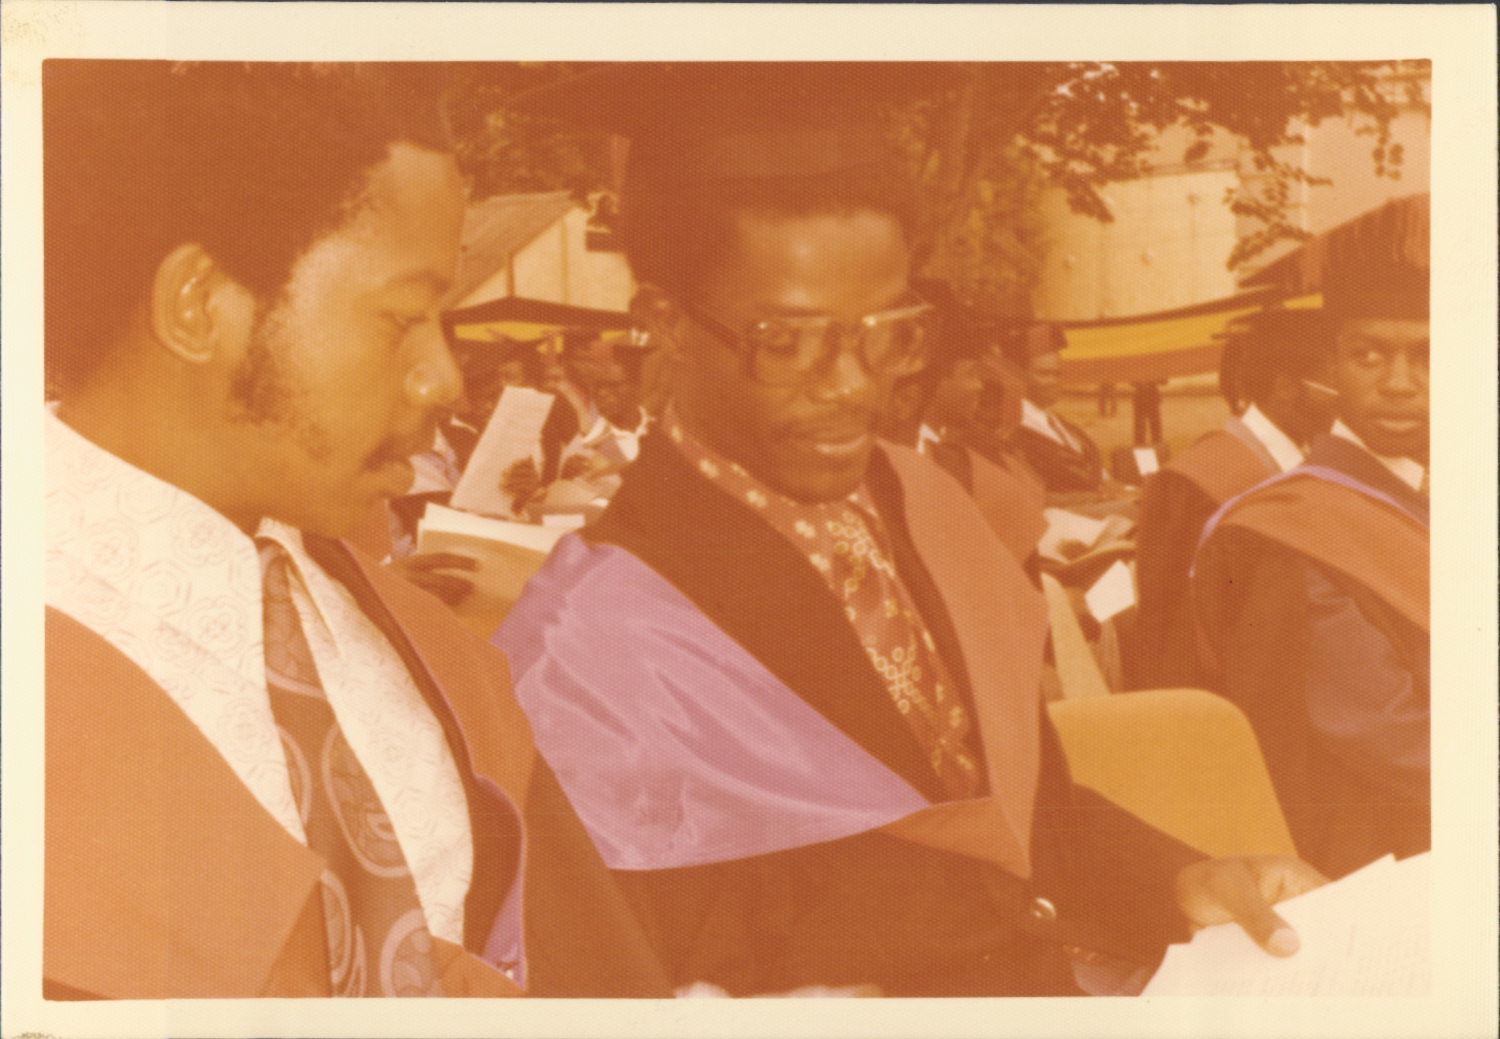 Friday March 18, 1977 - Graduation Day, Makerere University, Kampala